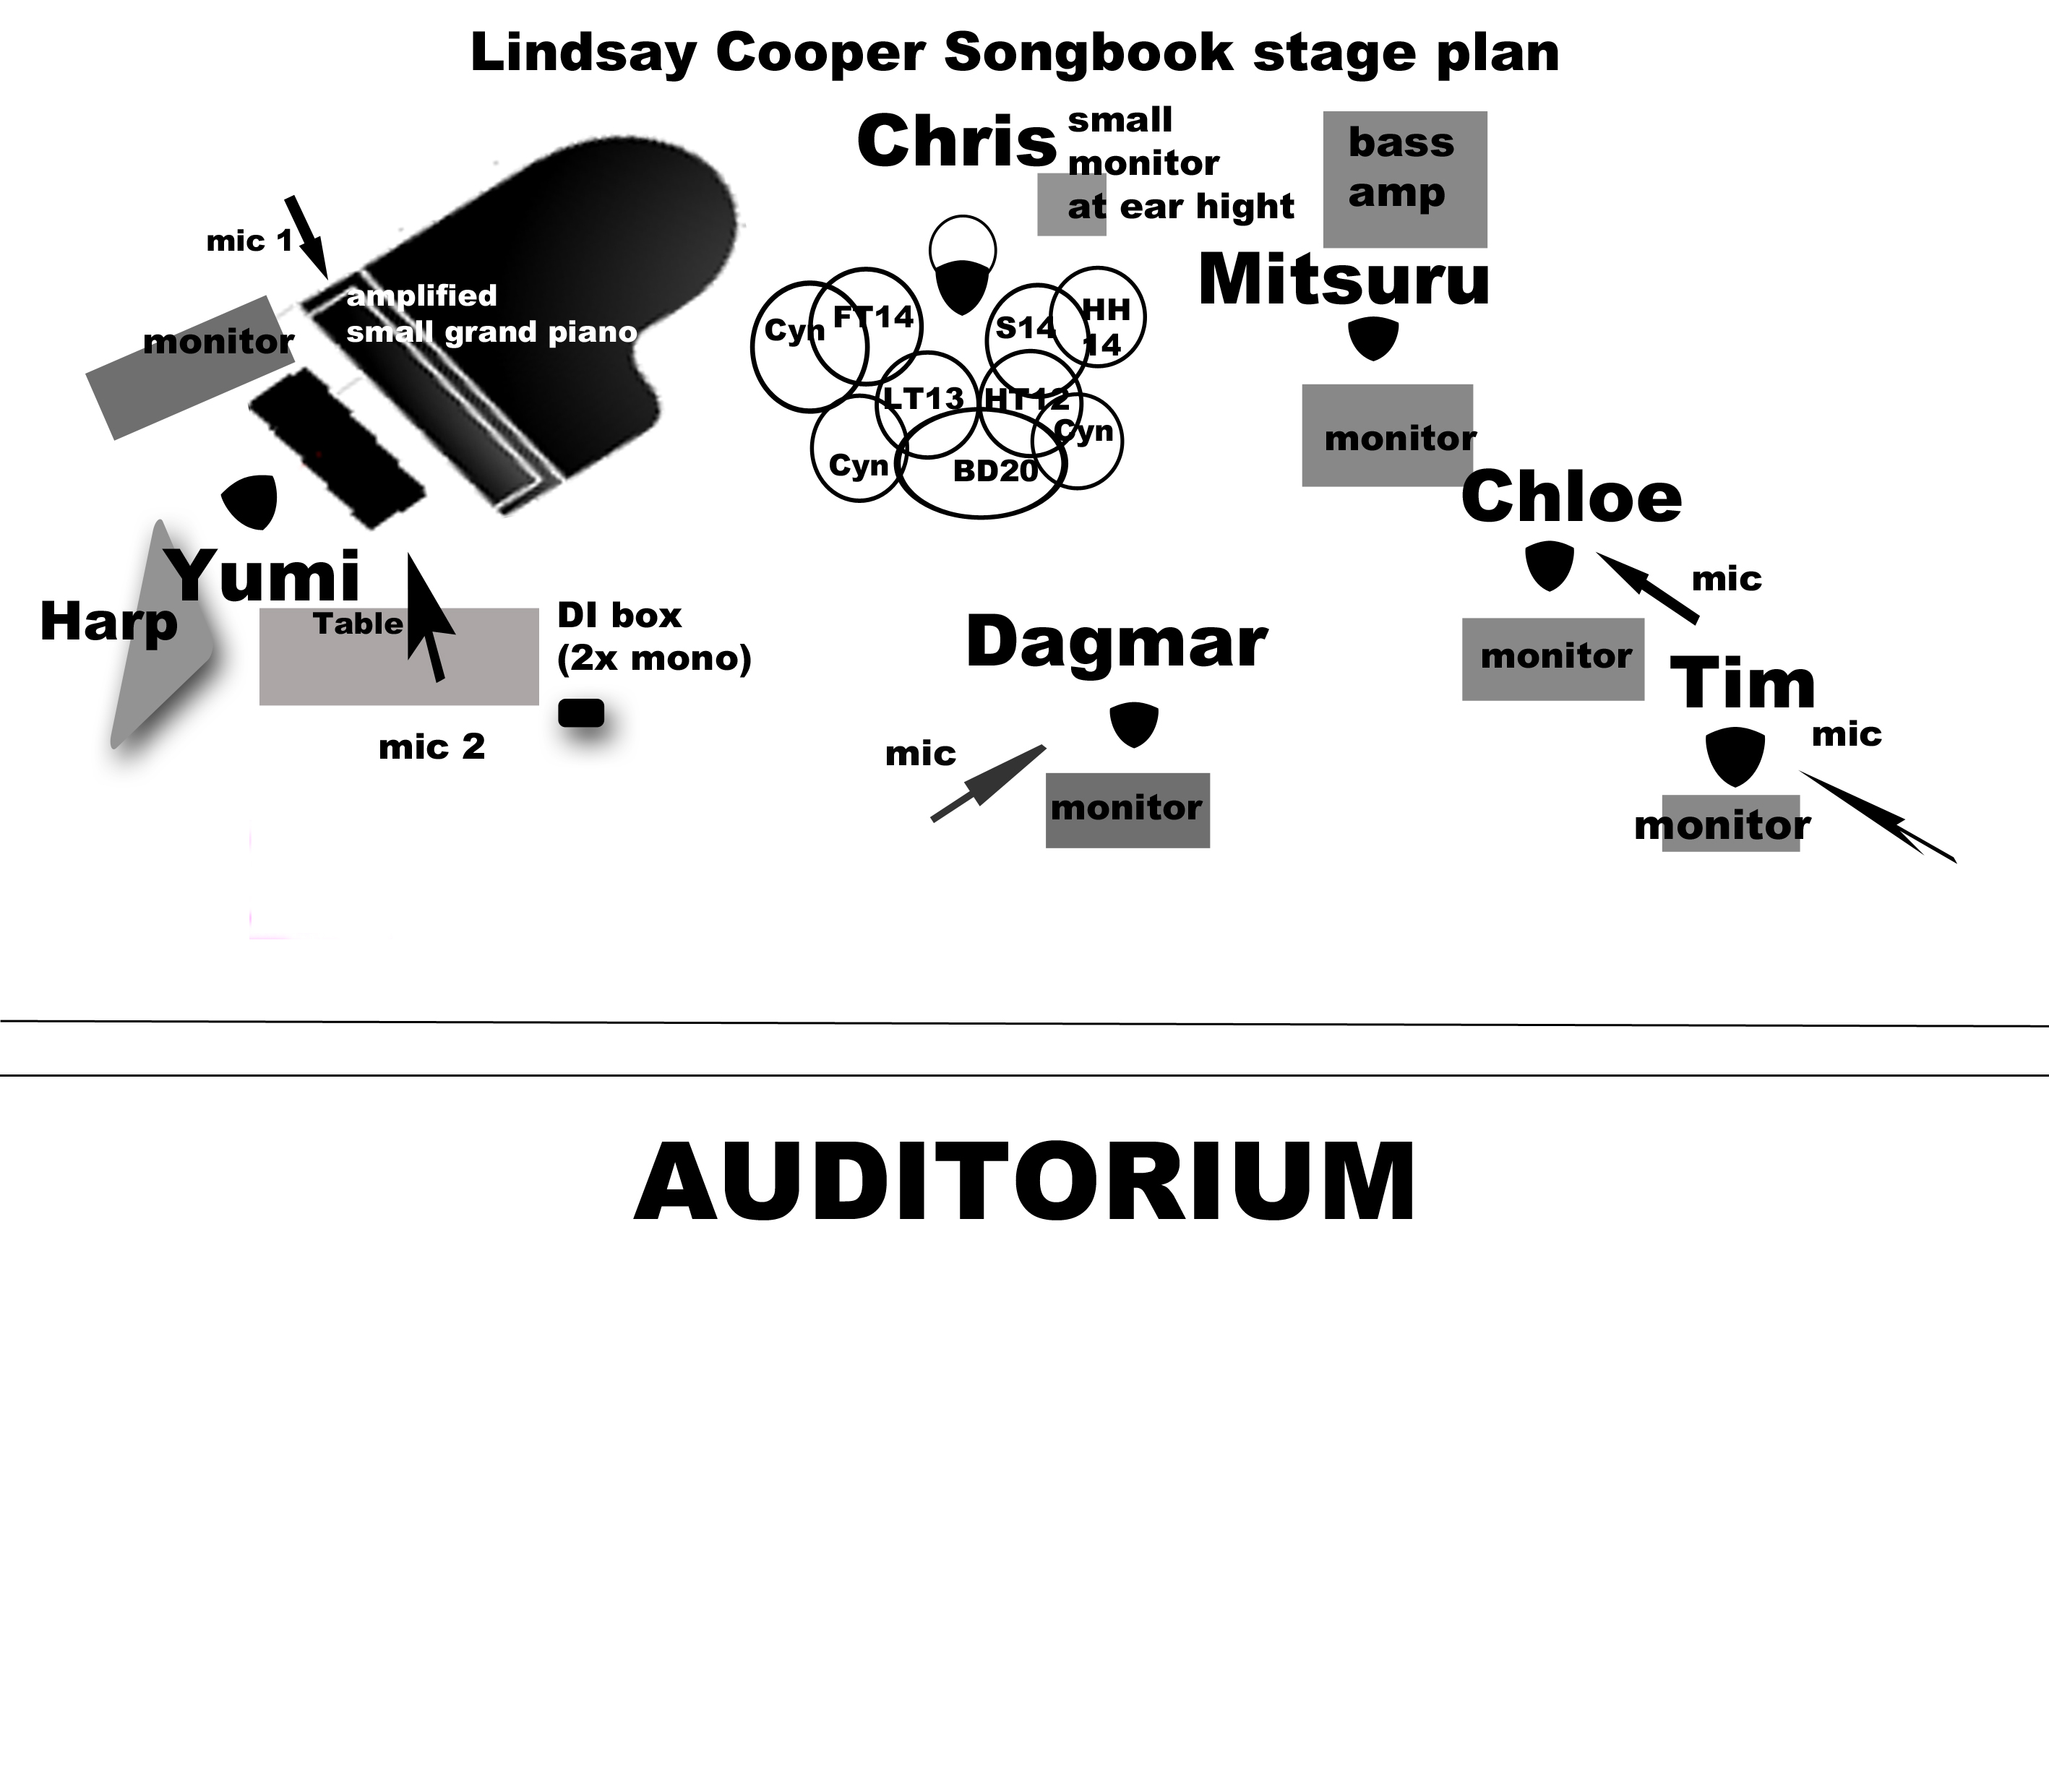 Lindsay Cooper Songbook stage plan